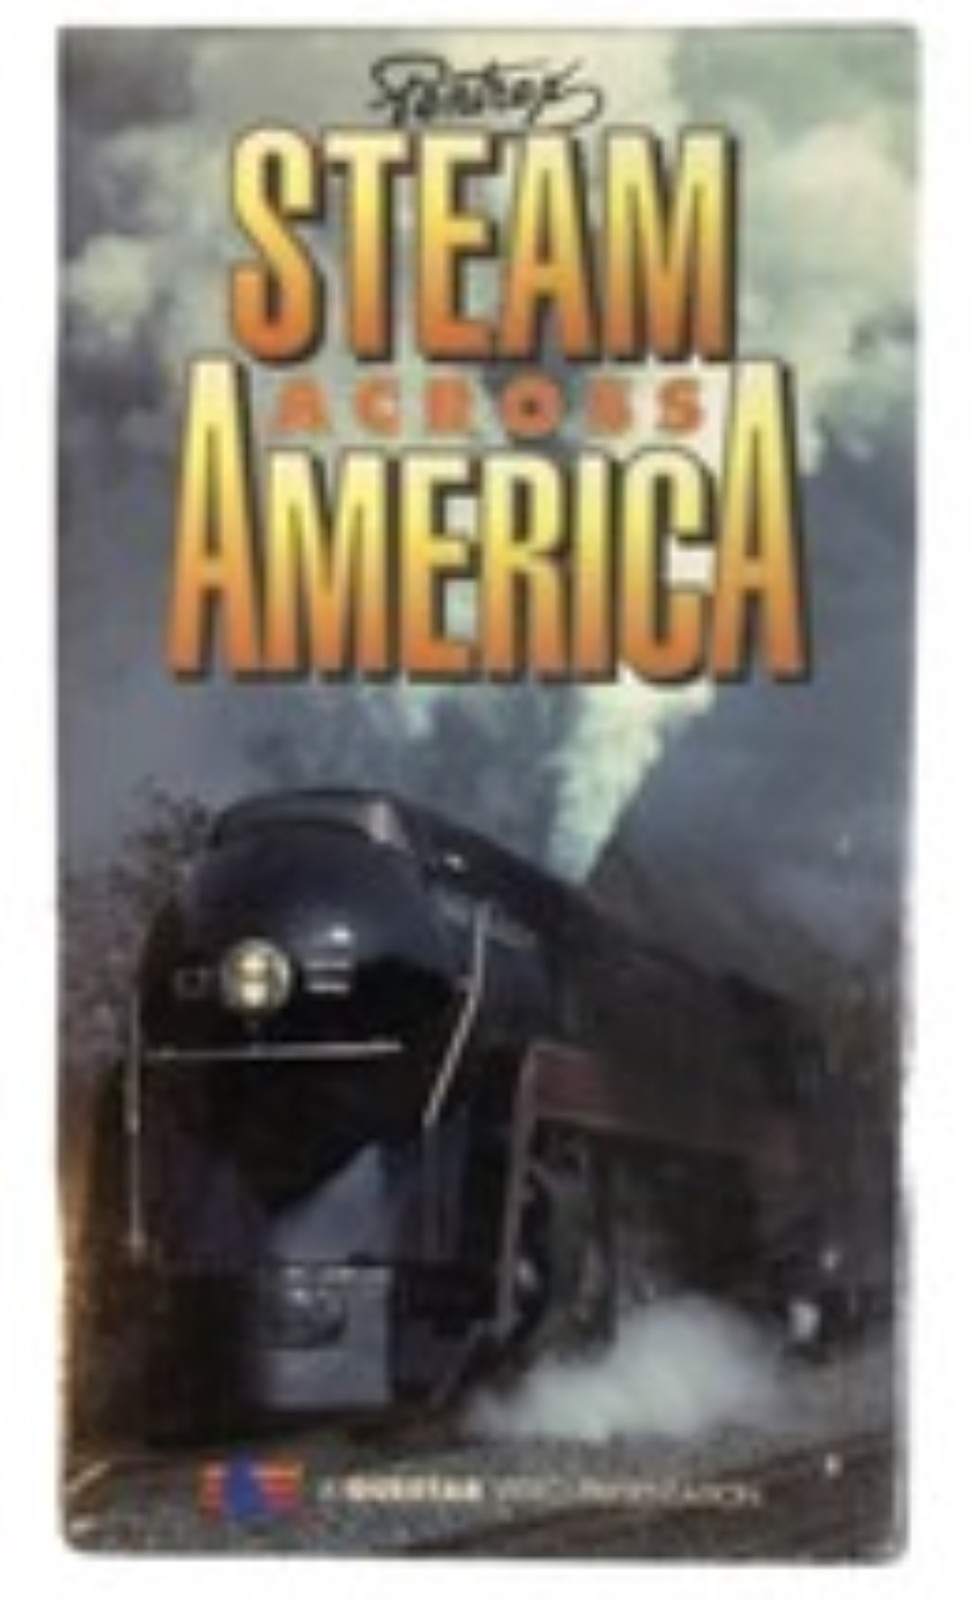 Steam across america  large 